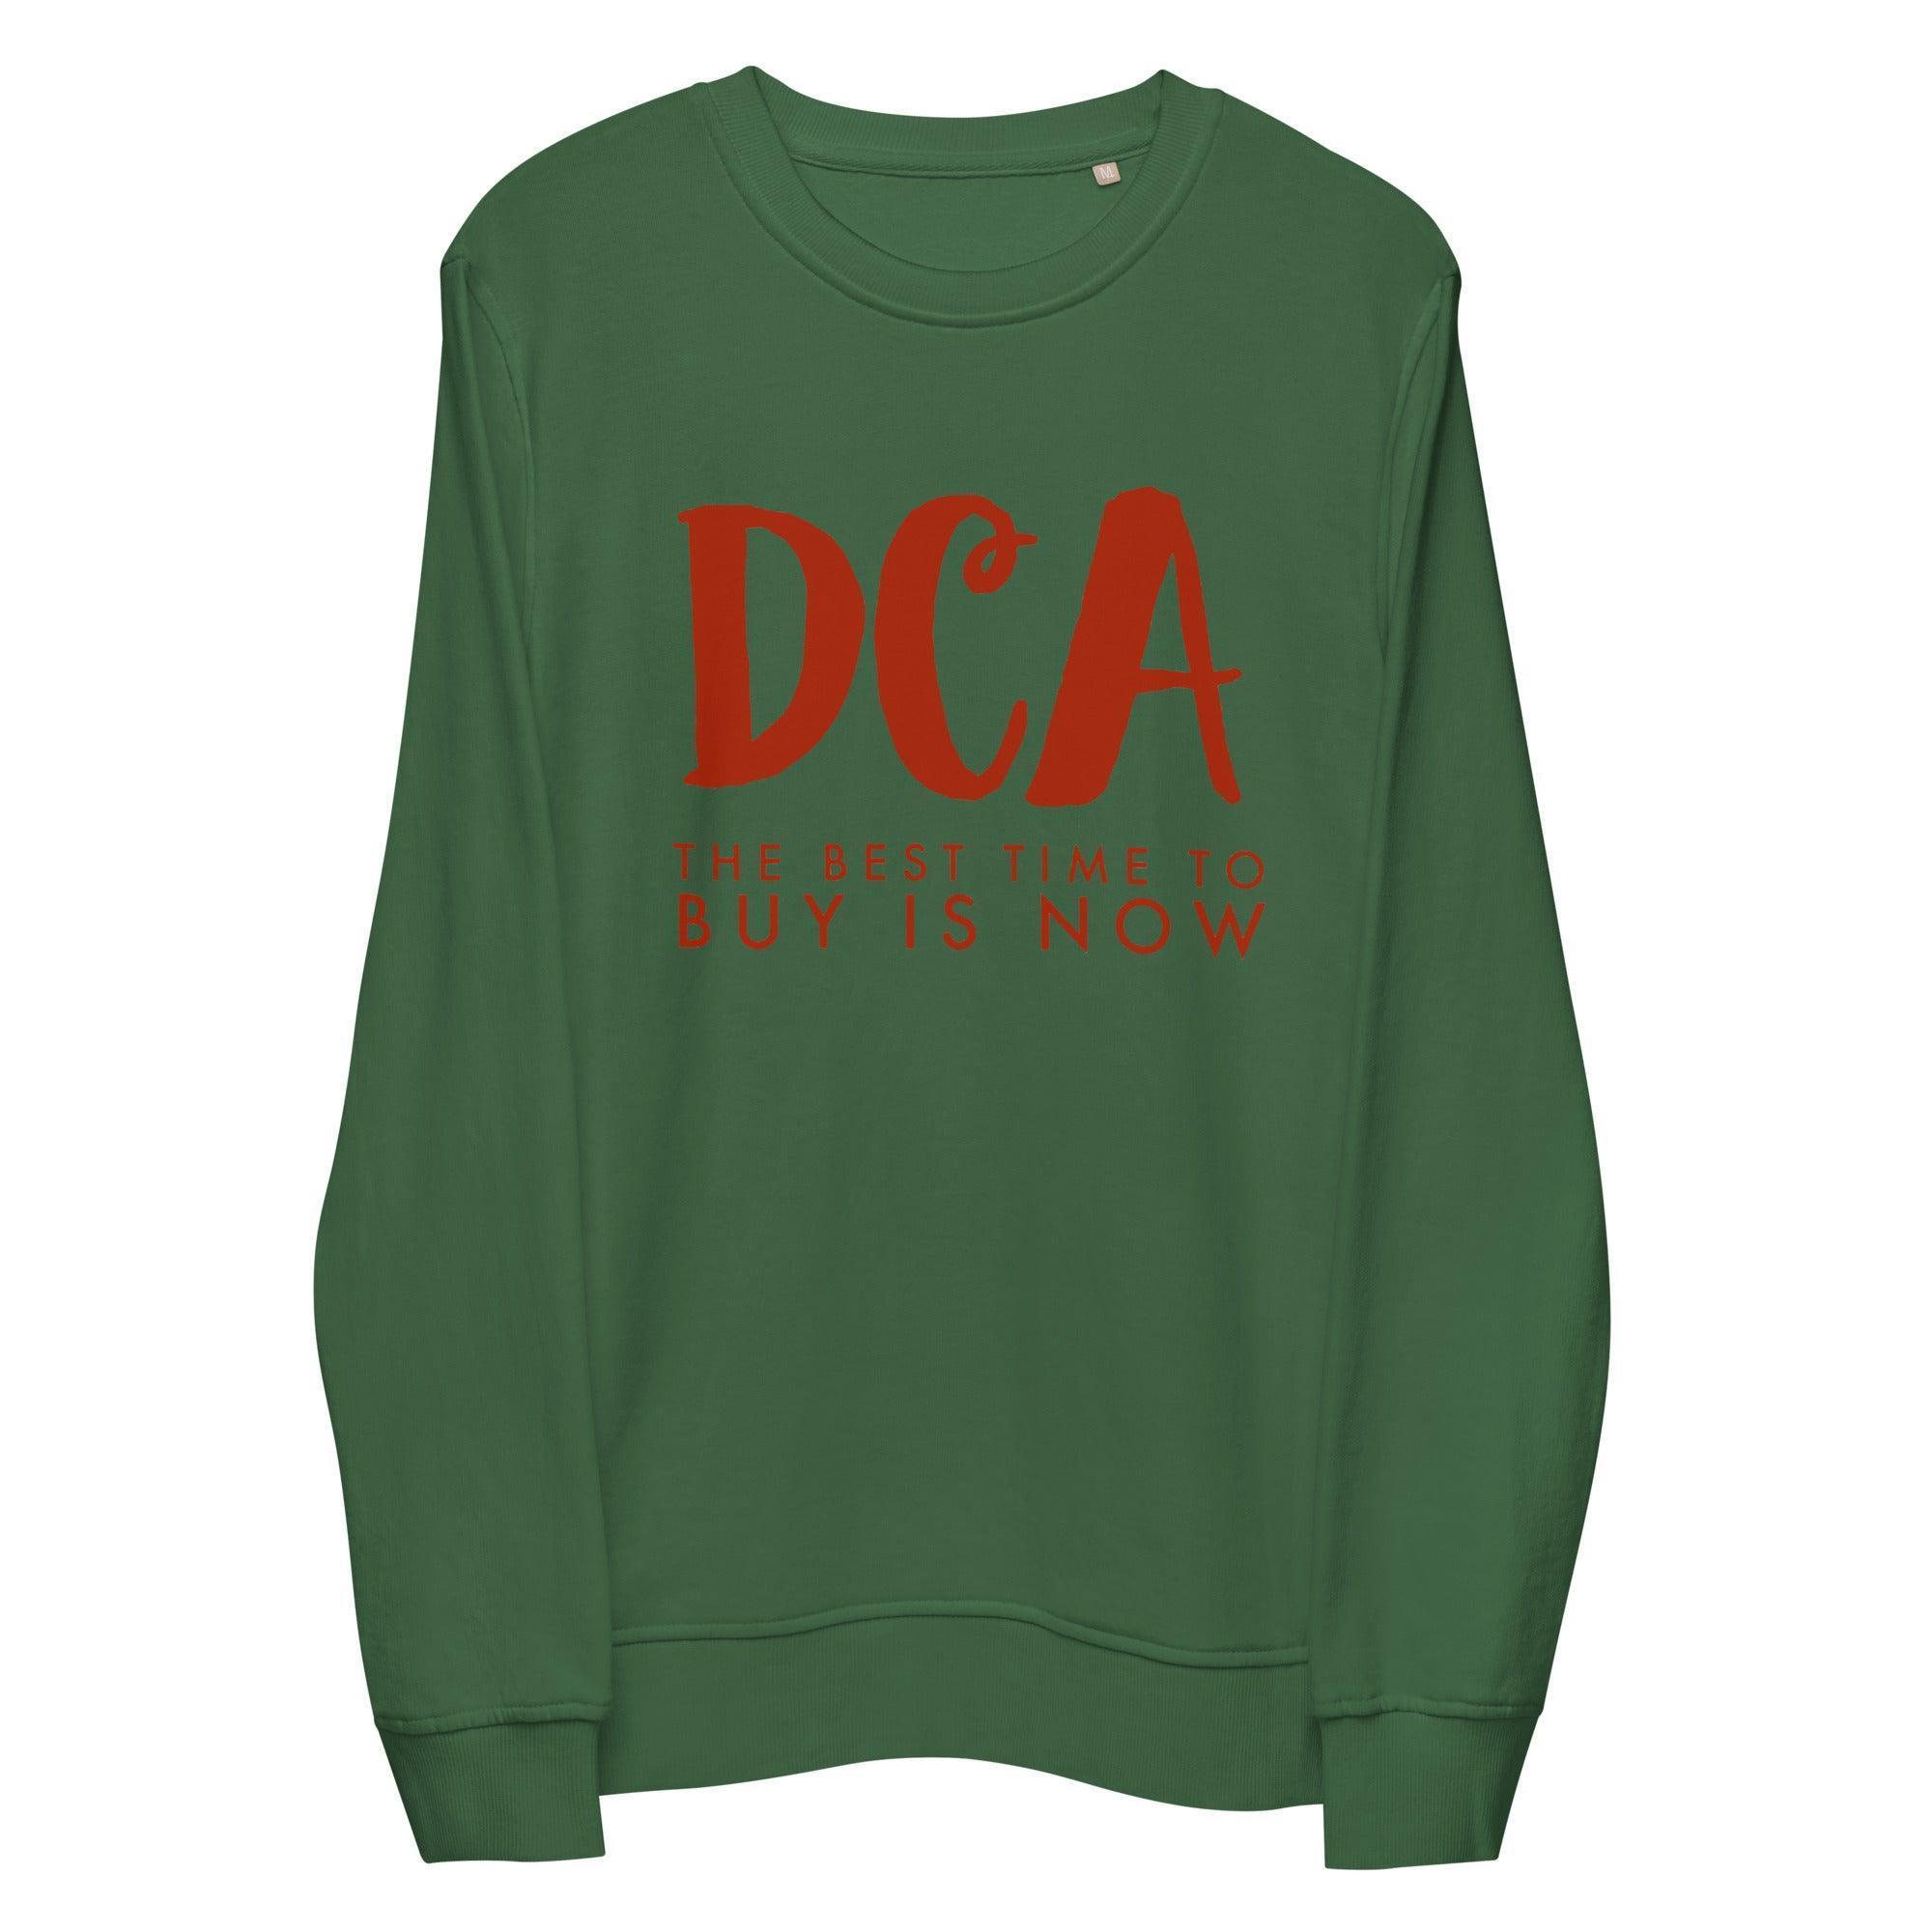 DCA | Dollar Cost Averaging Sweatshirt - InvestmenTees